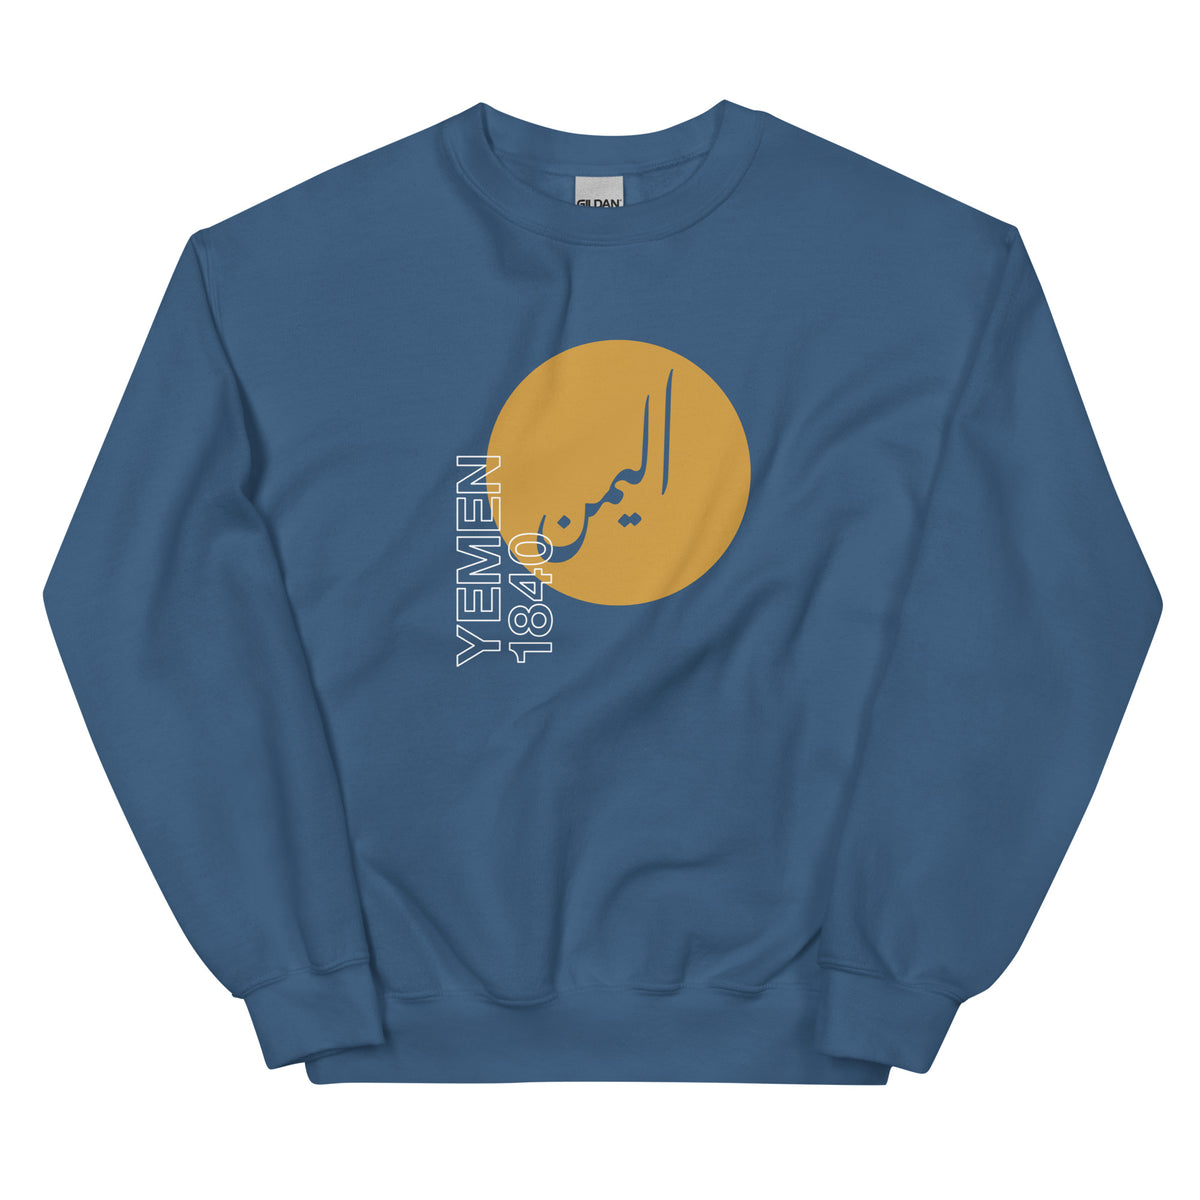 Yemen 1840 - Sweatshirt